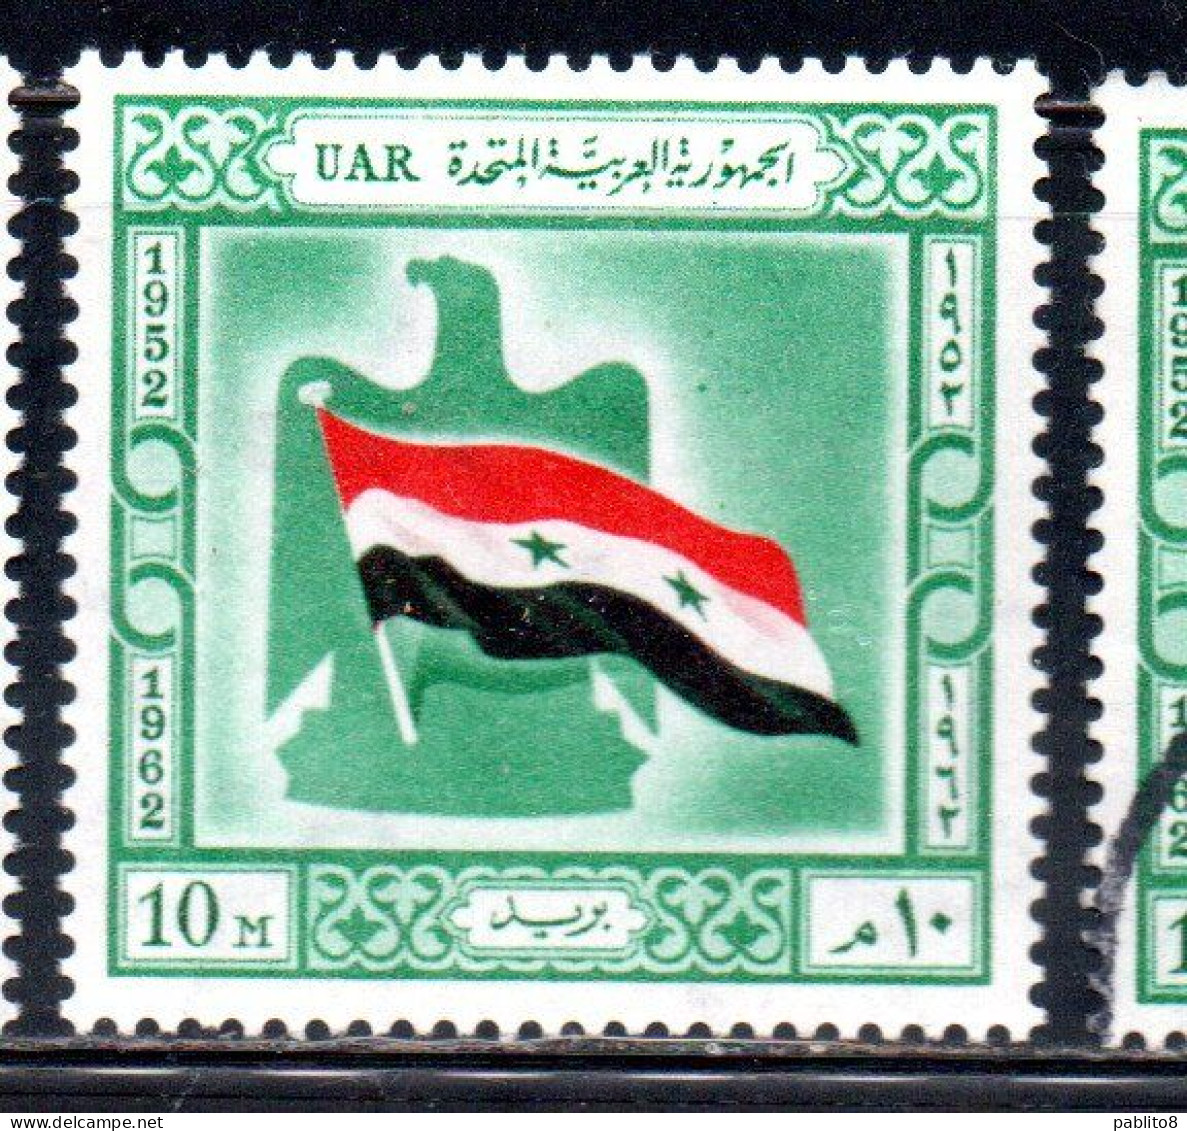 UAR EGYPT EGITTO 1962 BIRTH OF UAR FLAG AND EAGLE 10m MNH - Ungebraucht